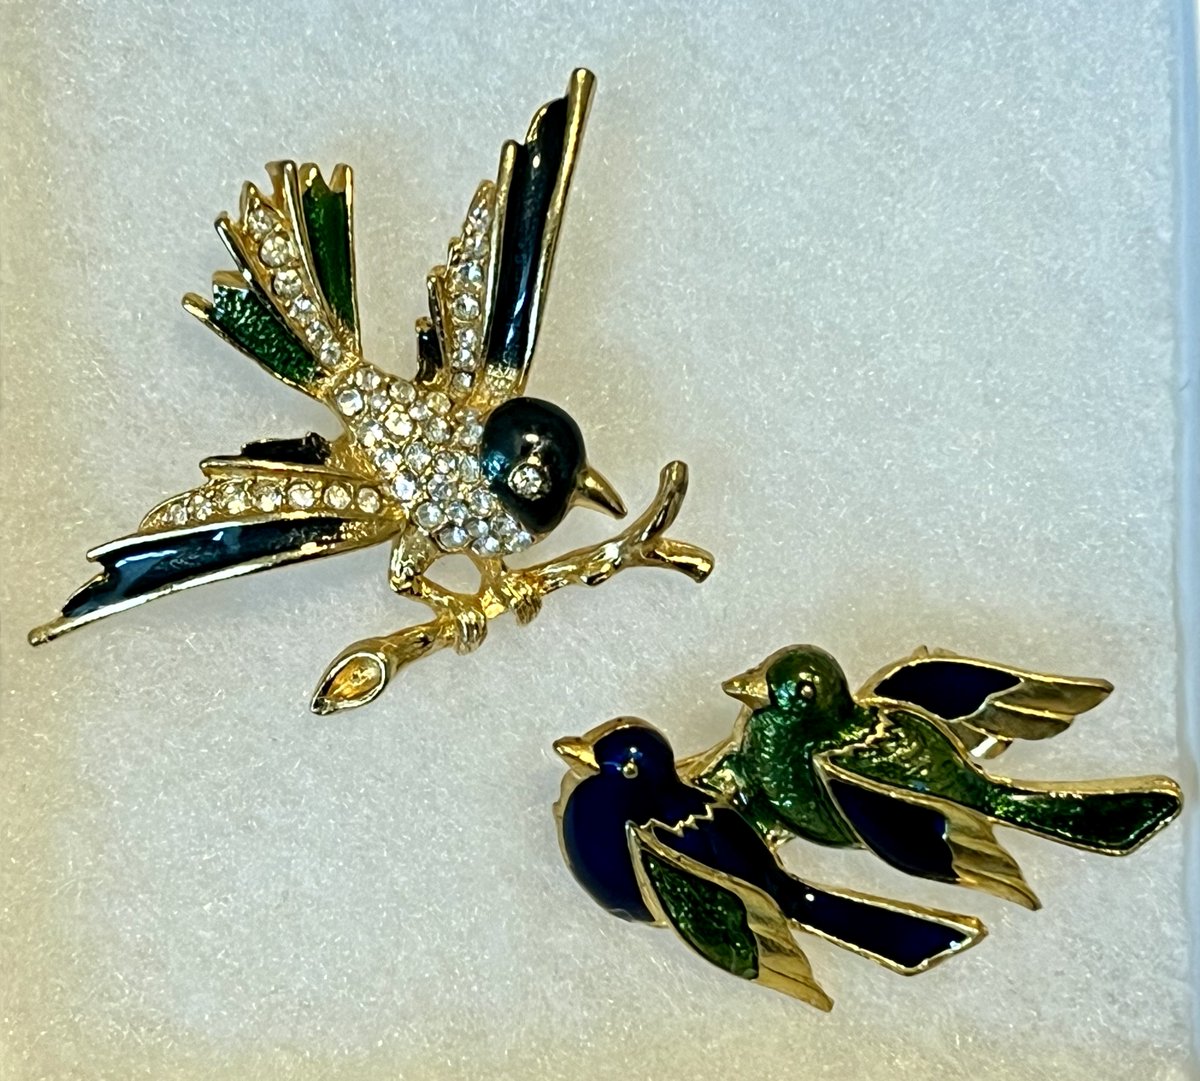 ADORABLE #EnamelBrooches Gold Tone #Birds Vintage Brooch LOT 2 Blue & Green #LapelPins FREE SHIP #brooches #rhinestones #springcolors #springfashion #jewelry #giftsformom #giftsforher #enameljewelry #vintagejewelry #ebayfinds #birdlovers #ThinkSpring ebay.com/itm/2666913243…